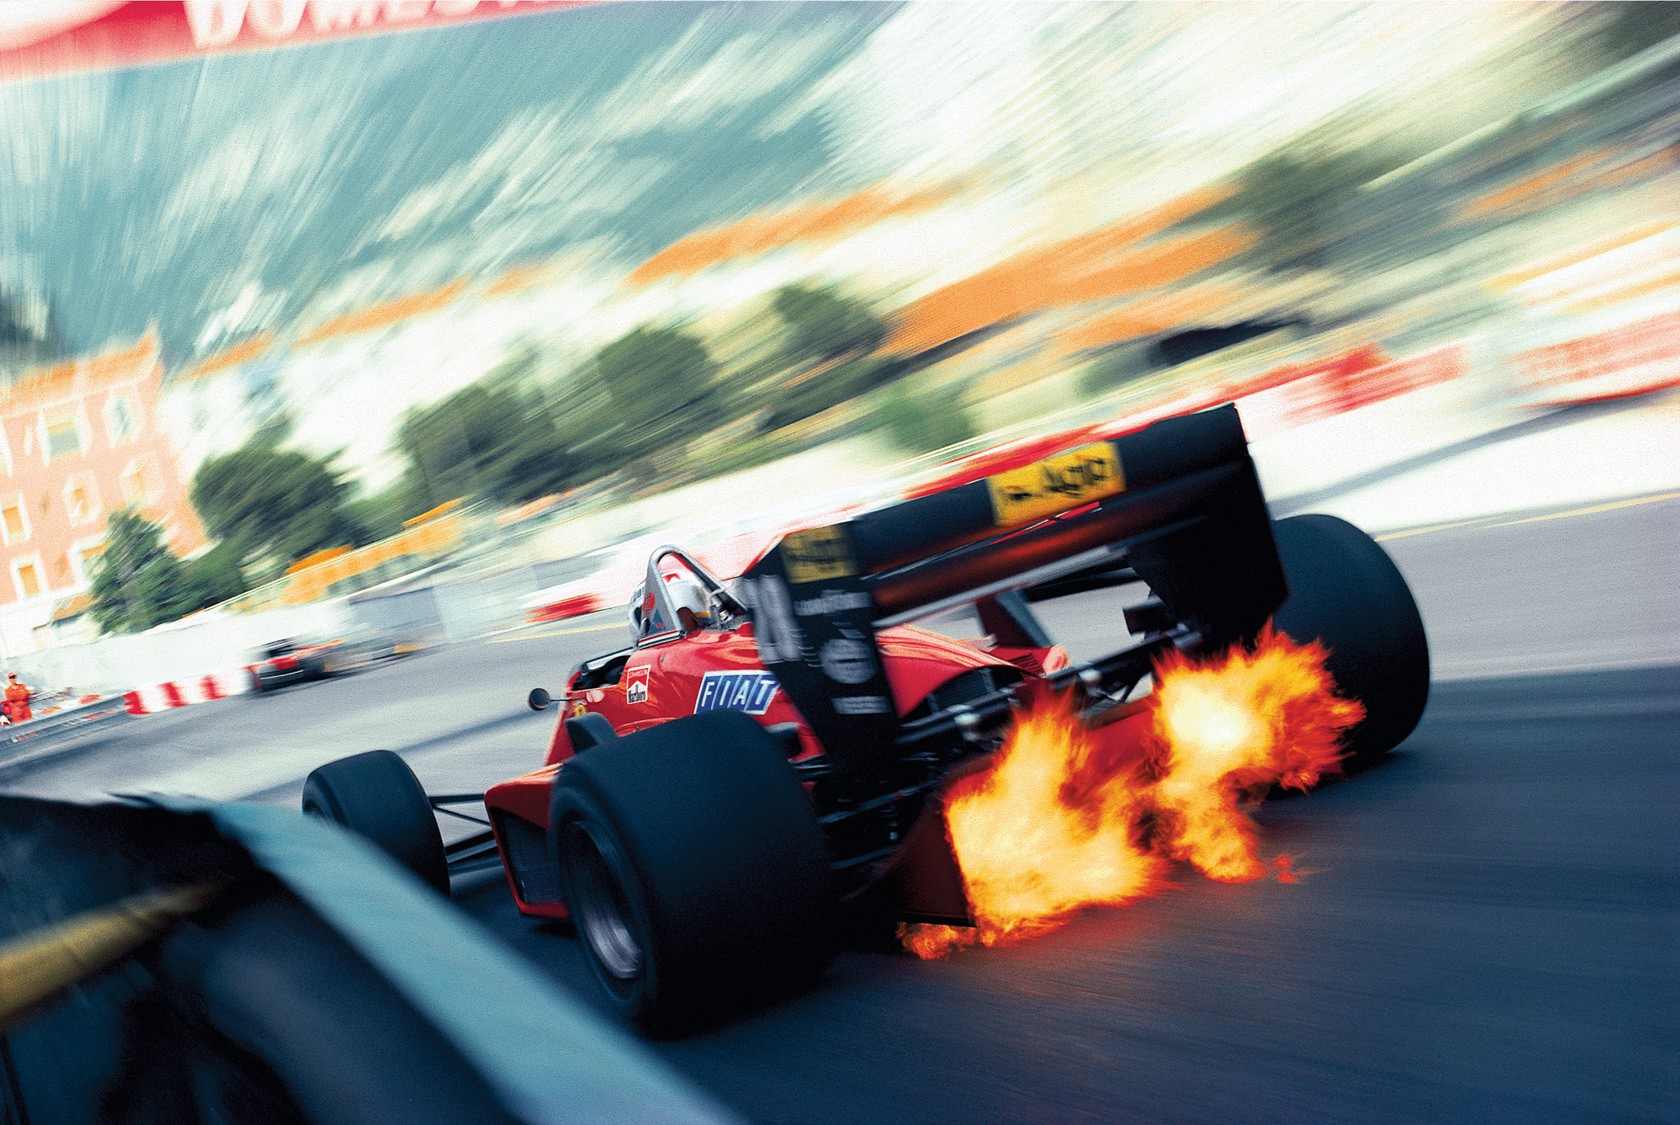 General 1680x1125 car racing Ferrari Monaco long exposure motorsport motion blur race cars fire sport vehicle race tracks livery